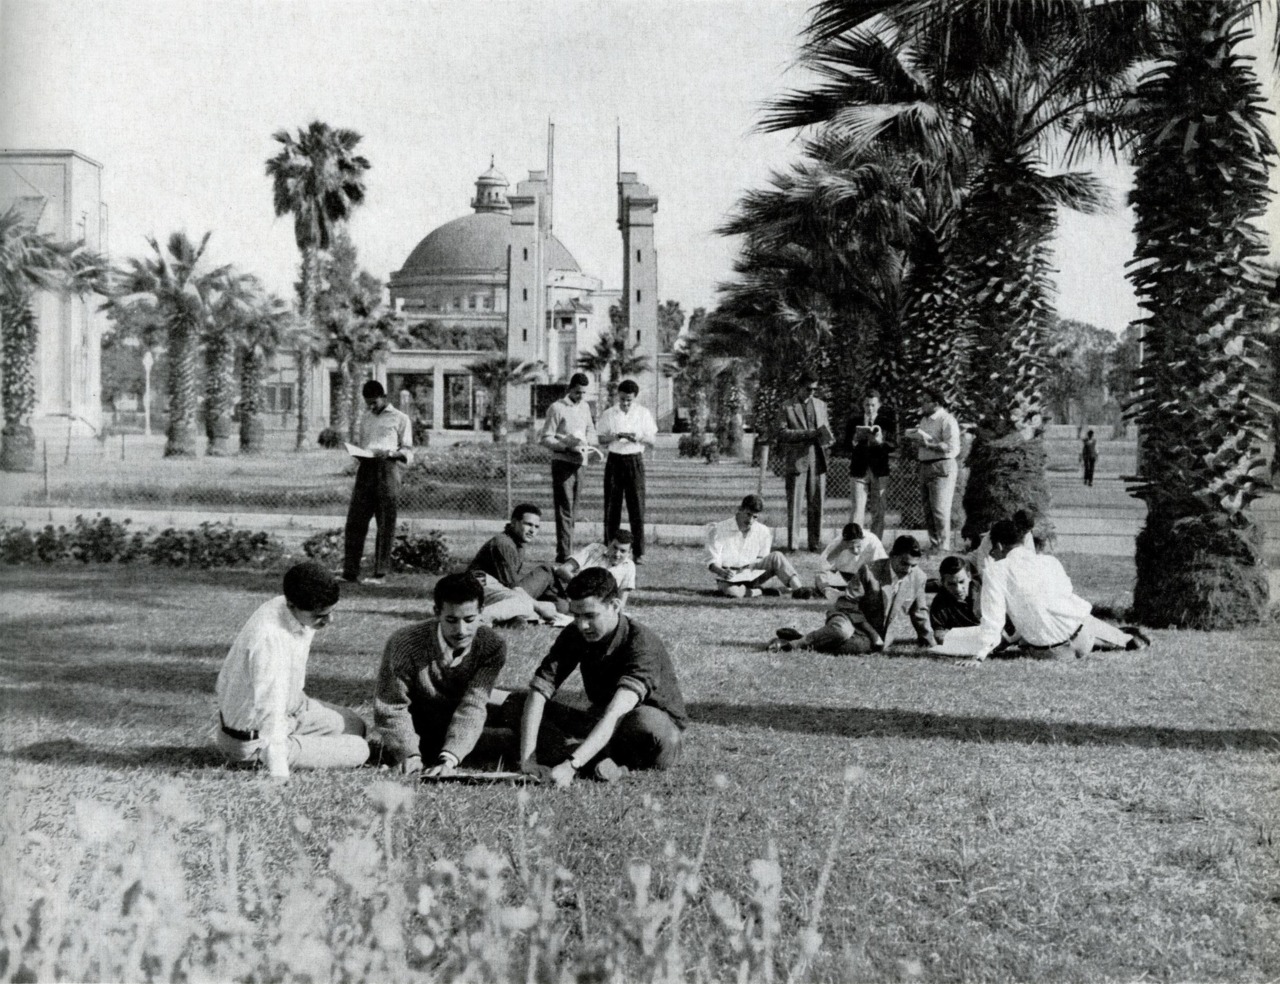 Cairo University in 1960